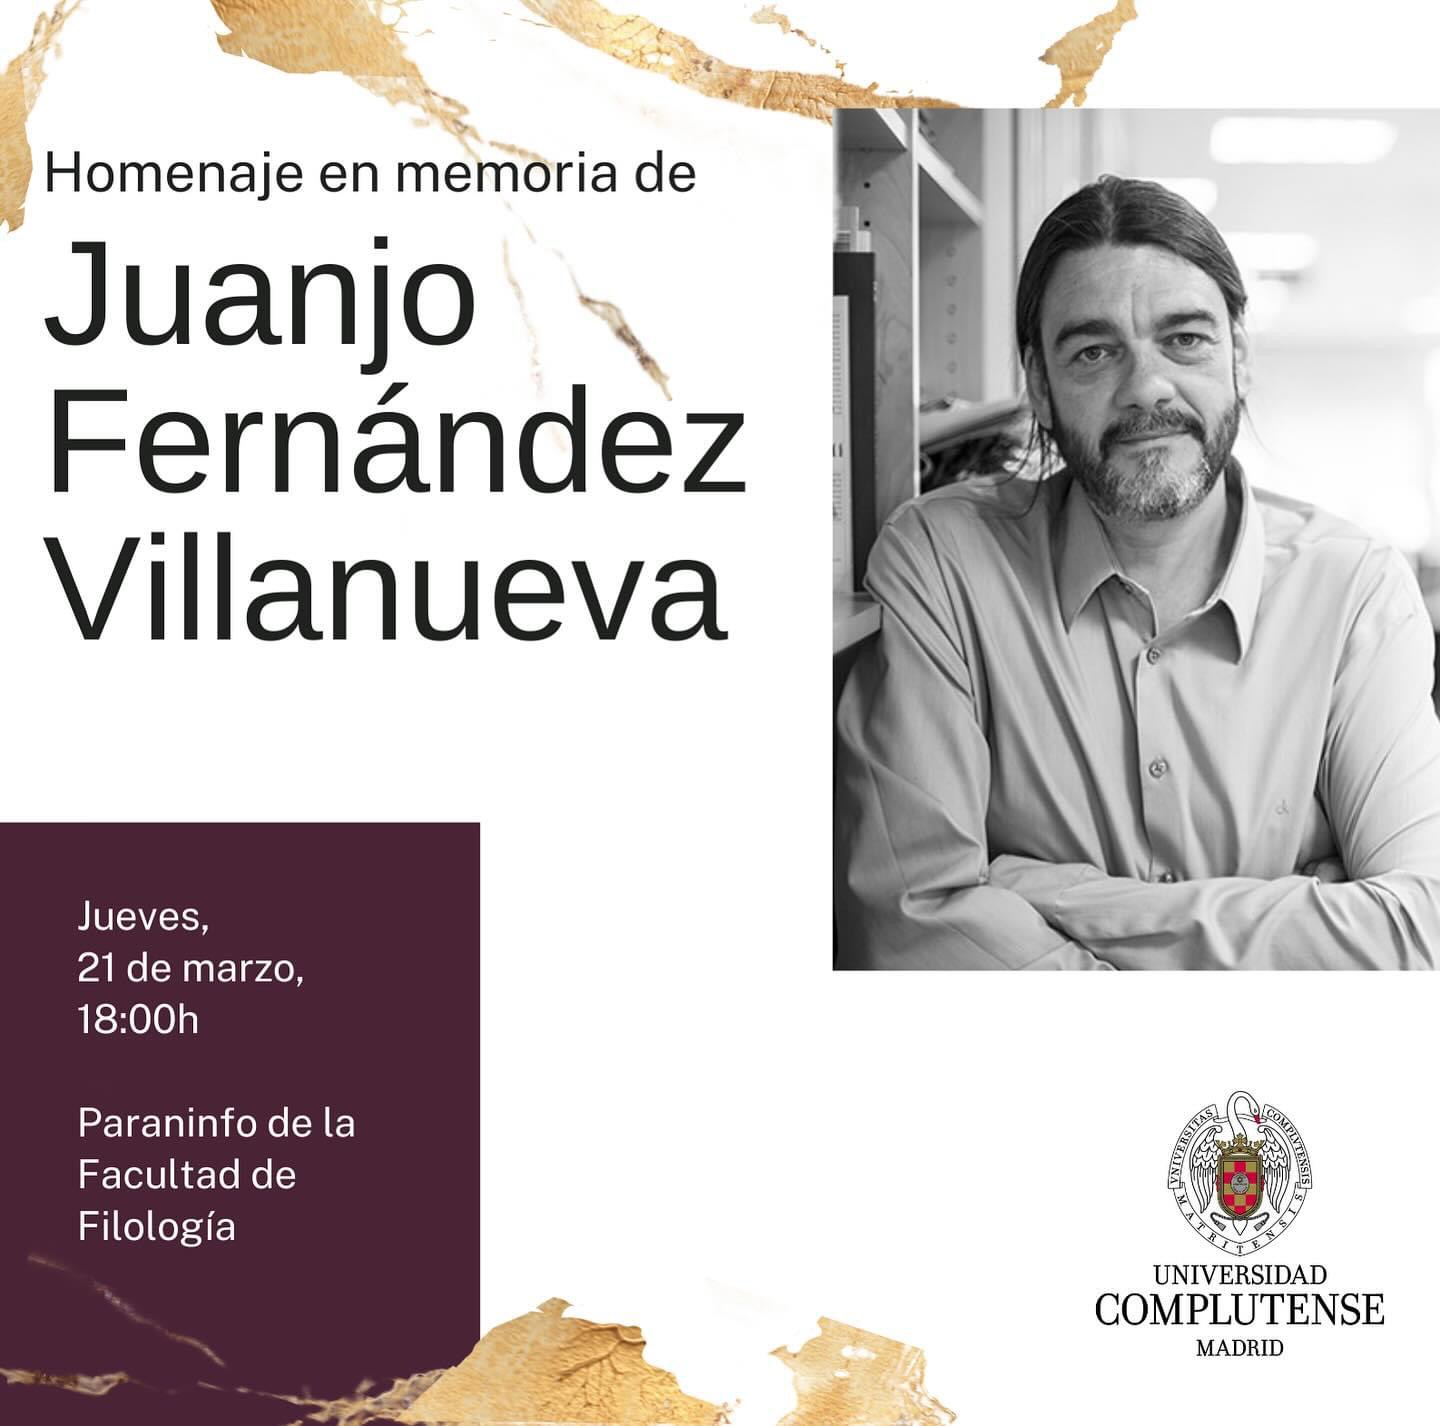 Homenaje en memoria de Juanjo Fernández Villanueva